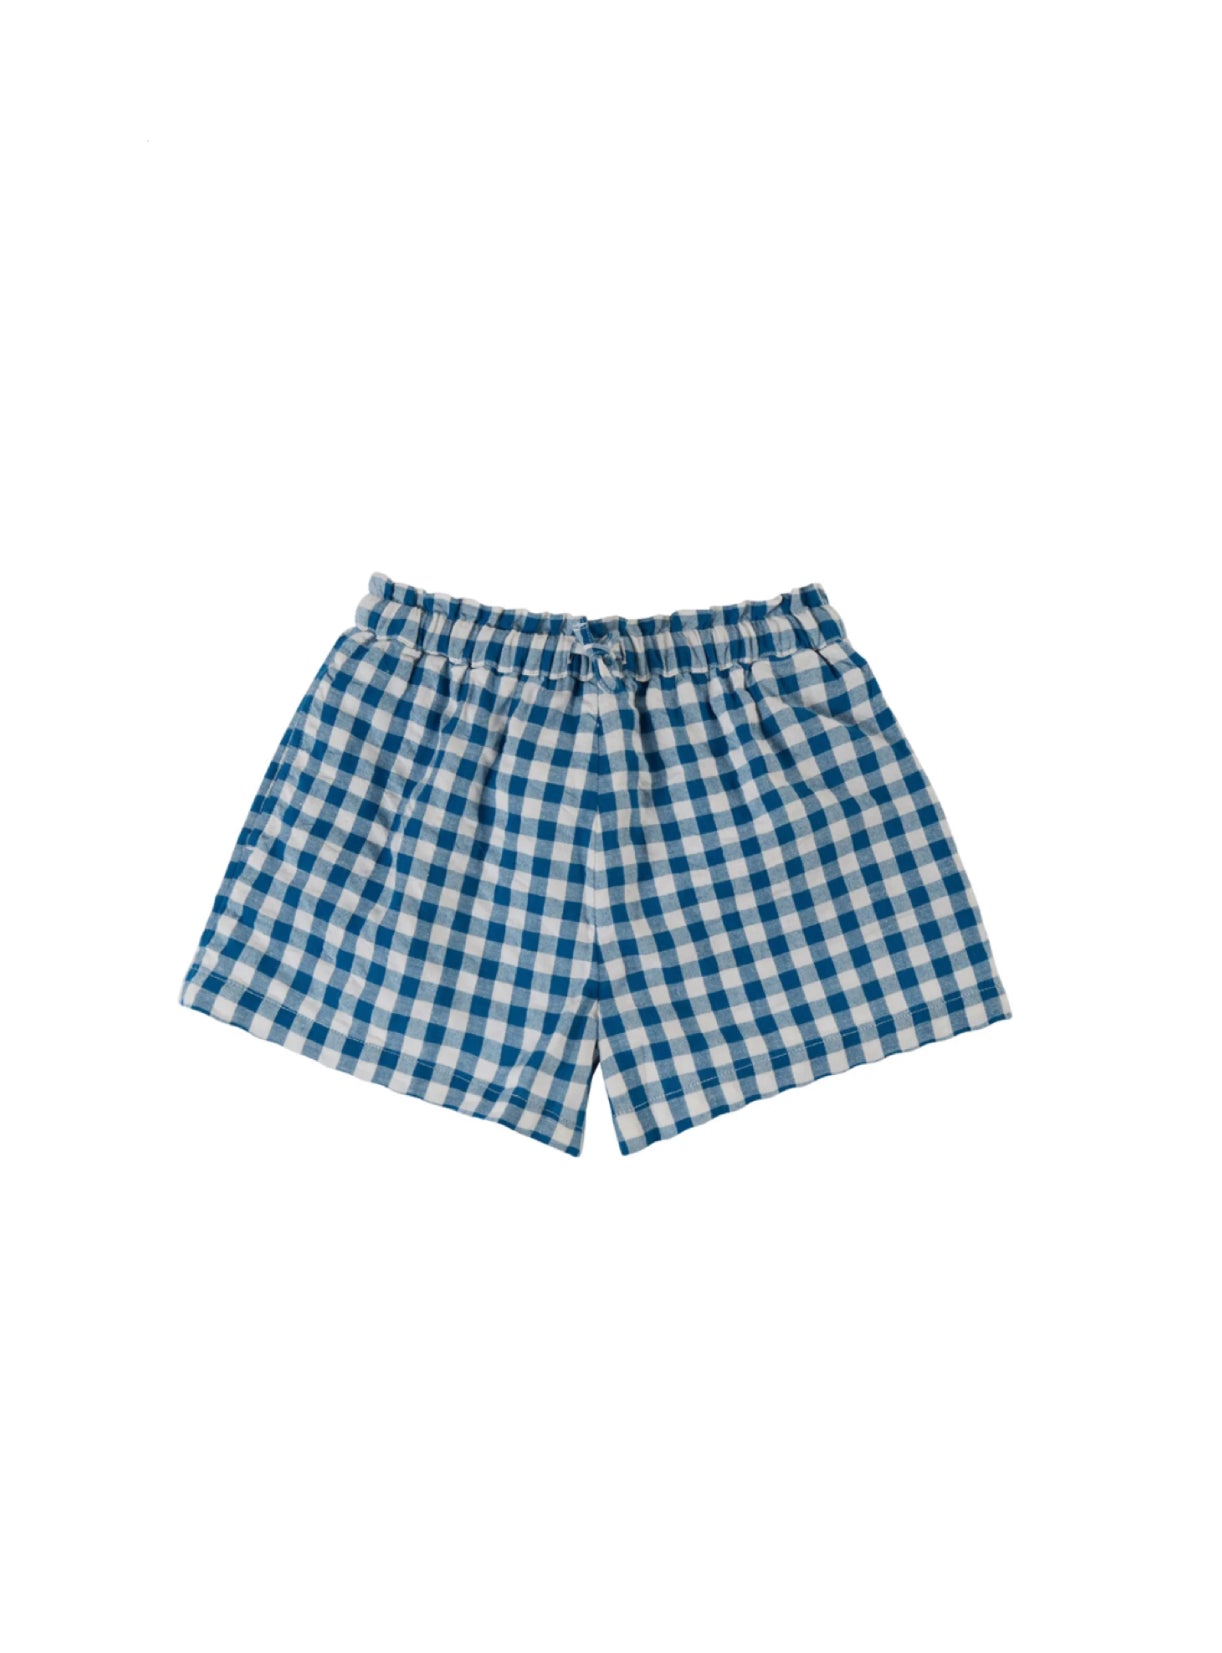 Frugi Catarina Check Shorts SALE